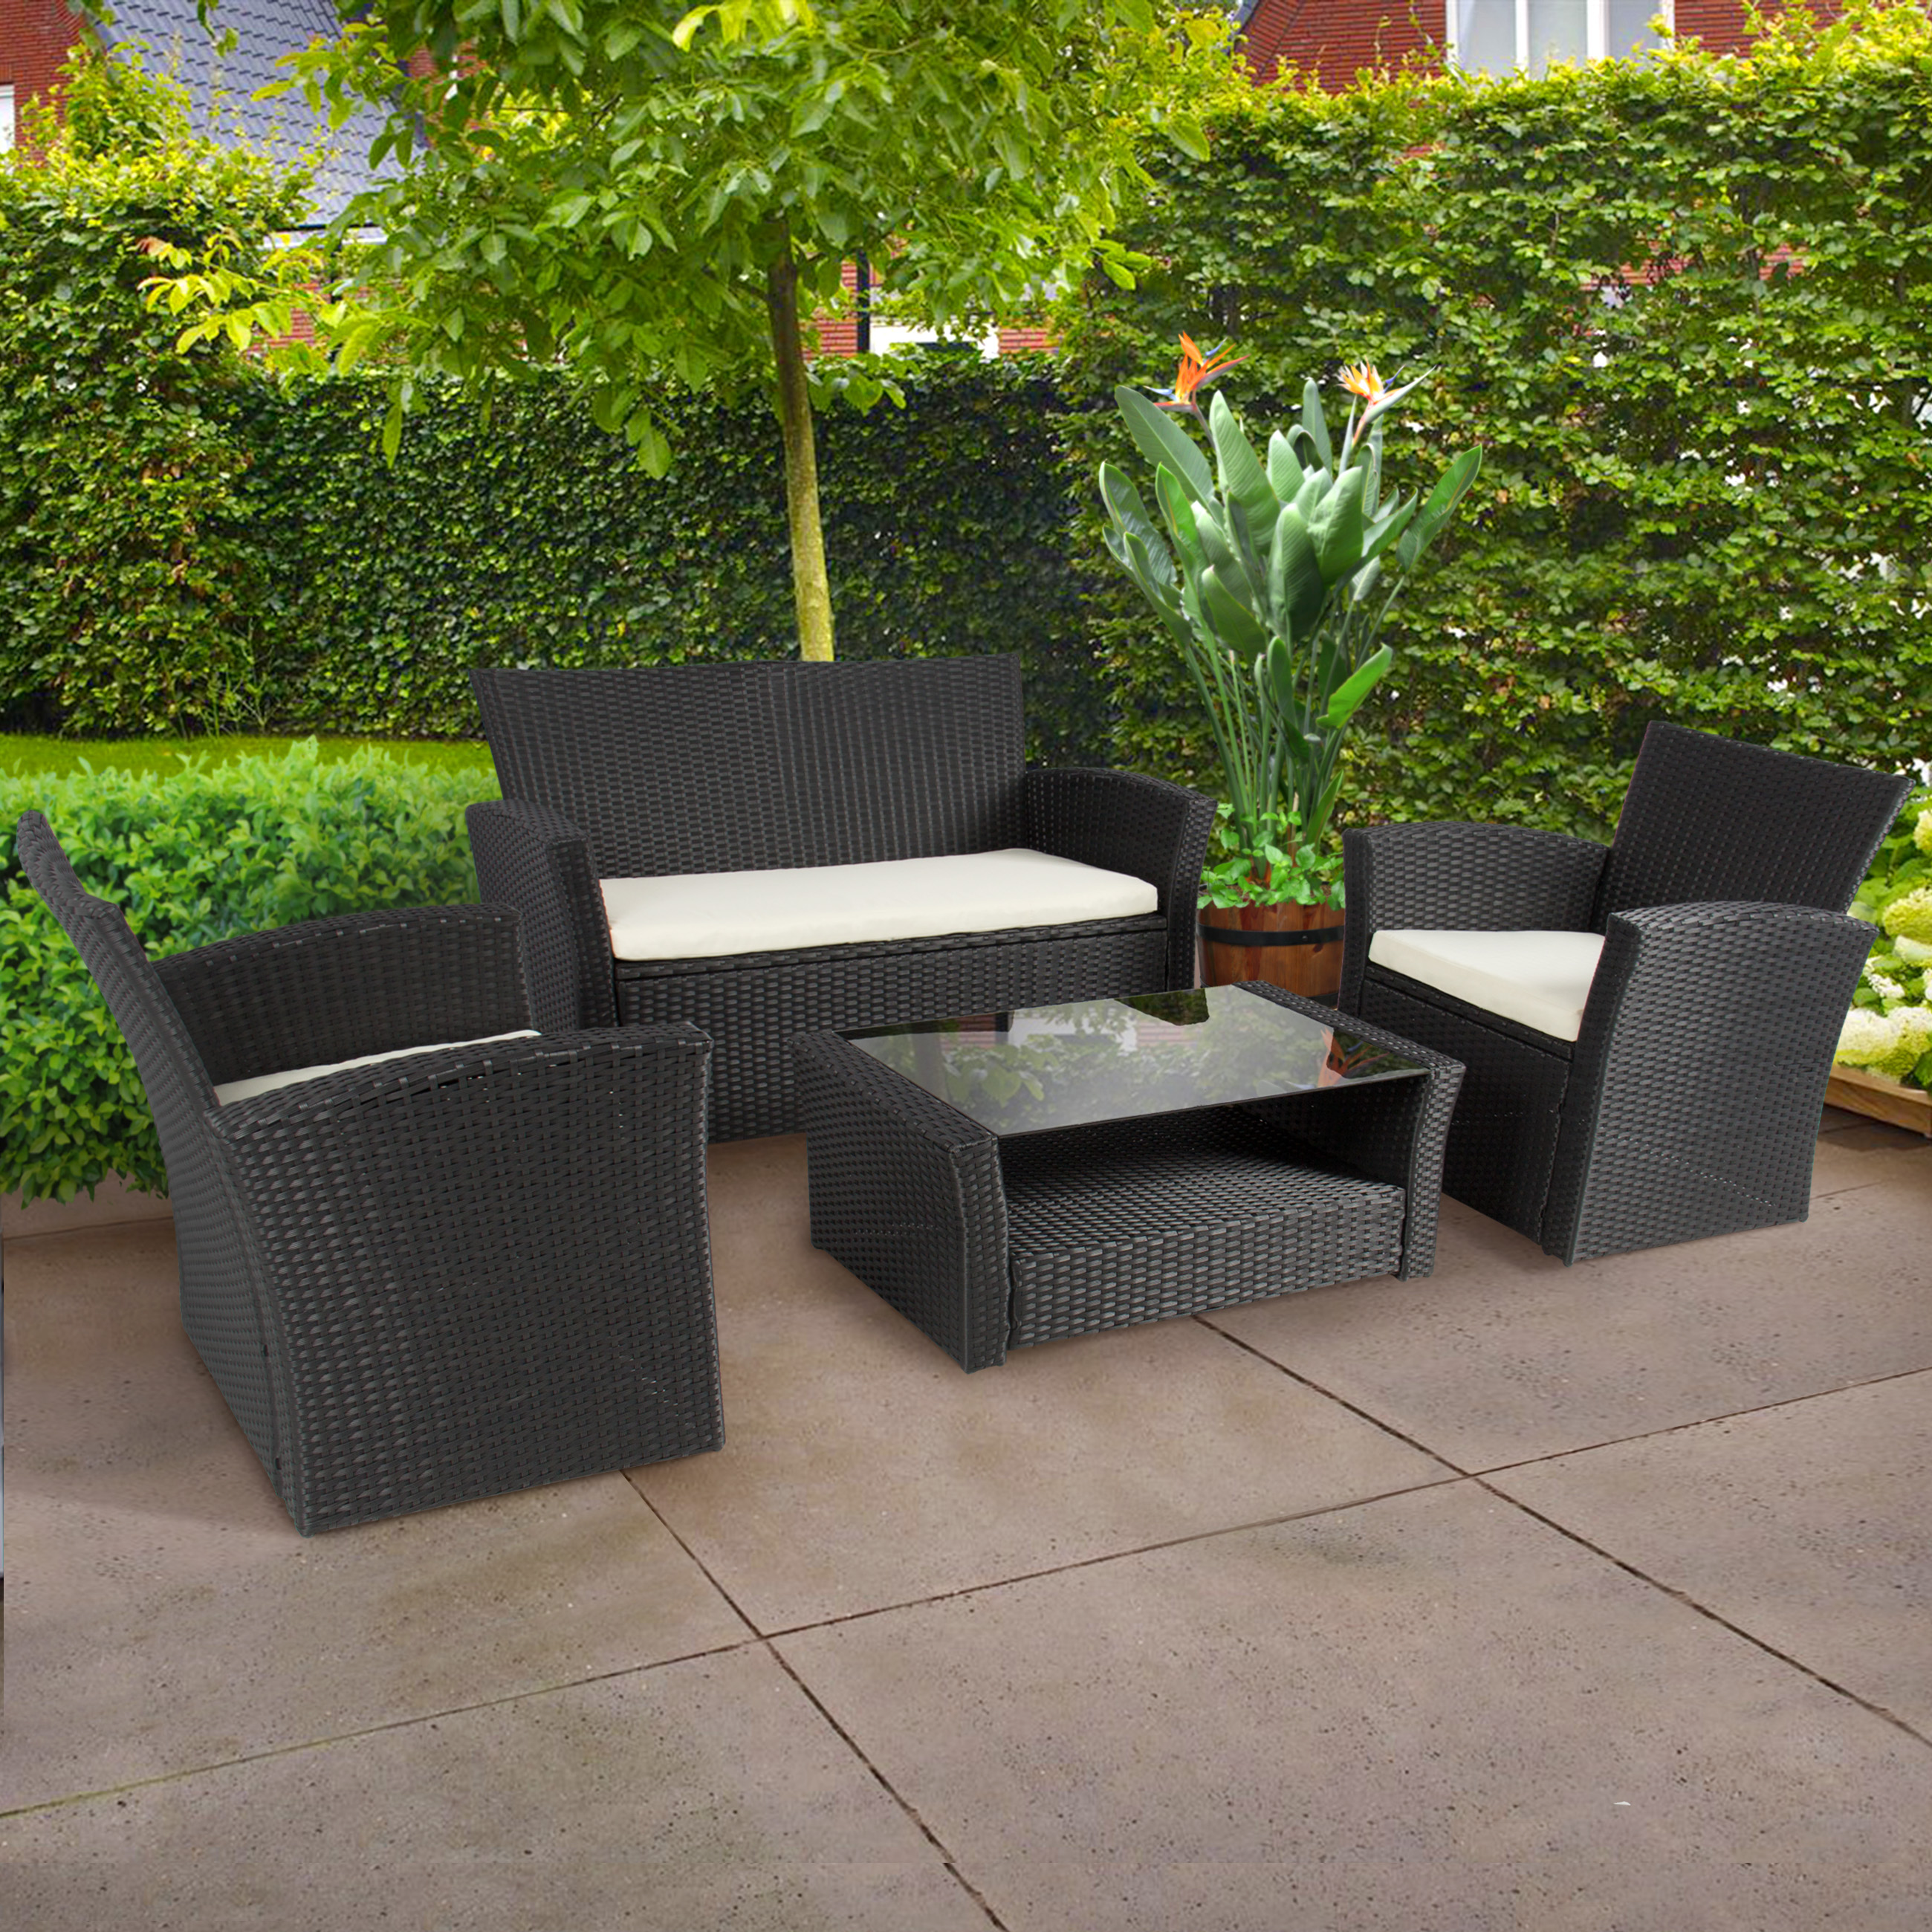 cheap rattan garden furniture sets 4pc outdoor patio garden furniture wicker rattan sofa set black - LFYMLKV